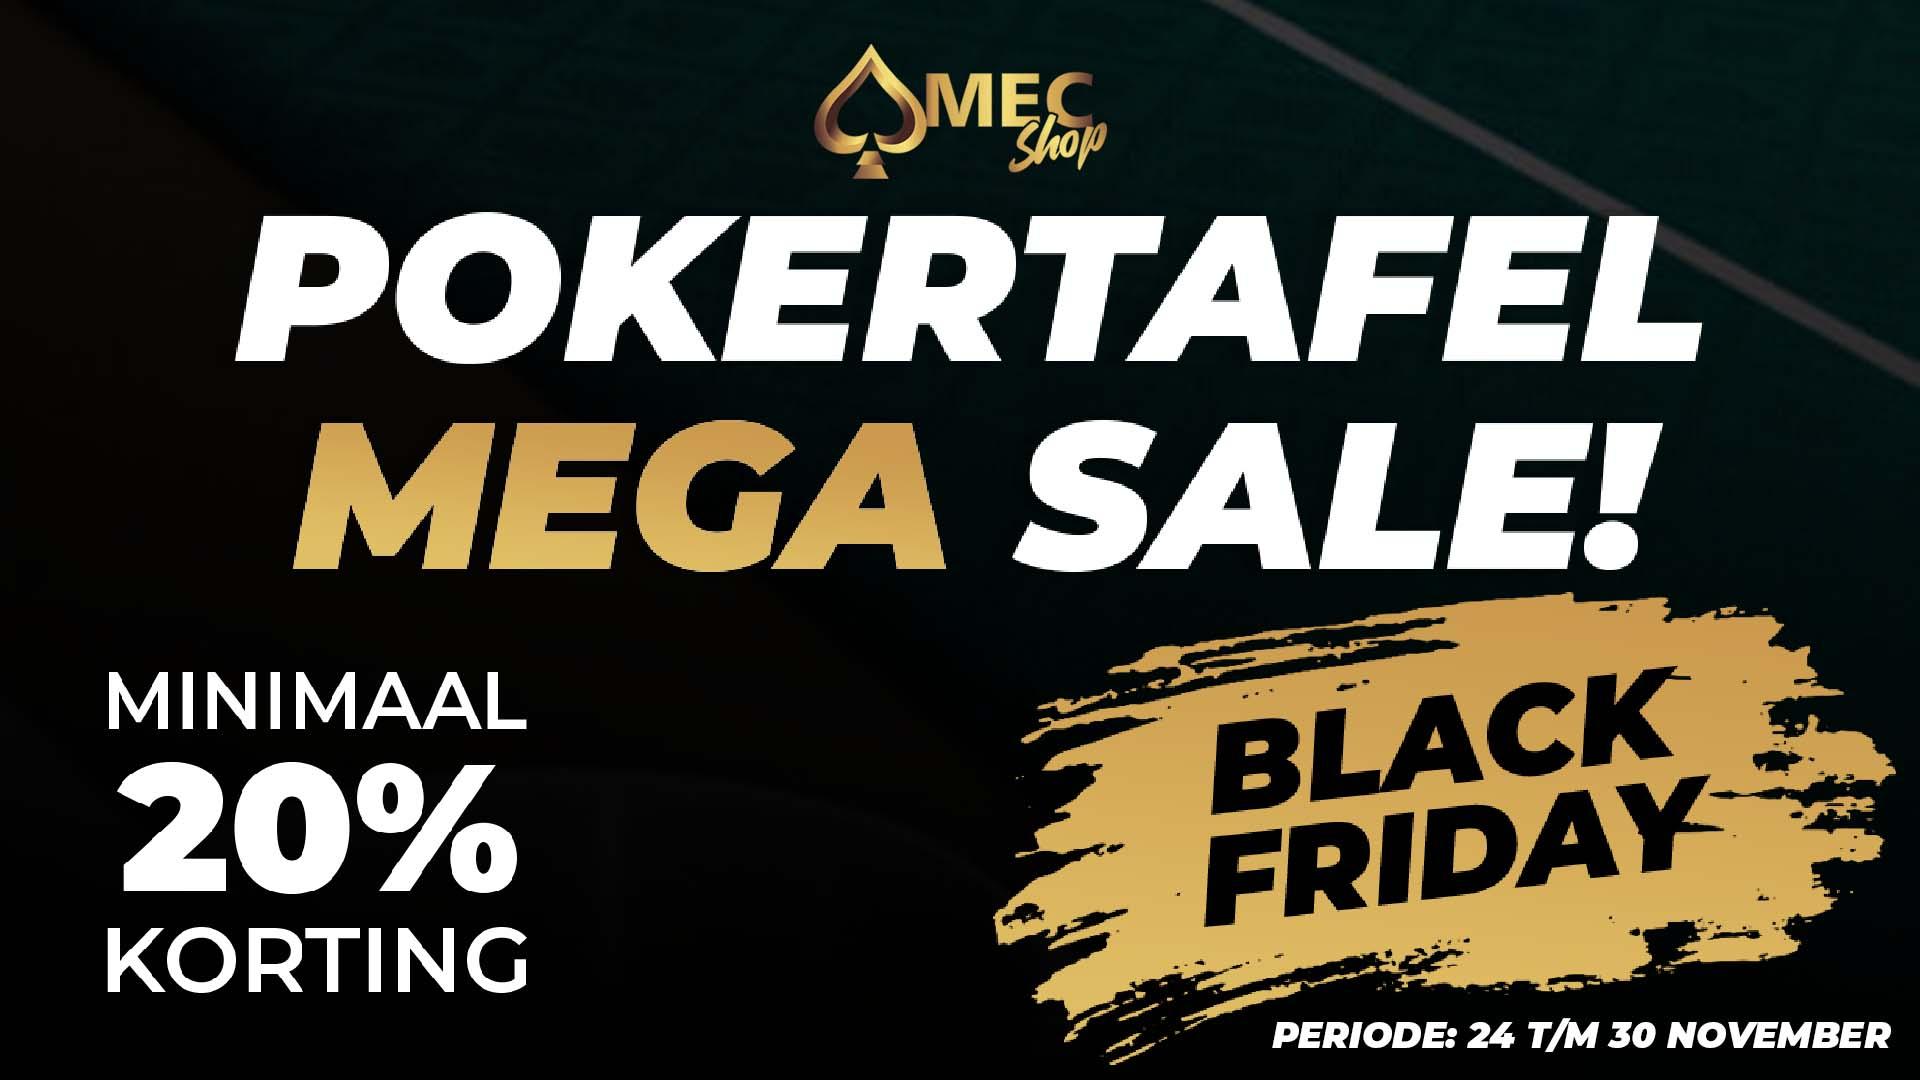 Pokertafel Mega Sale tijdens Black Friday!